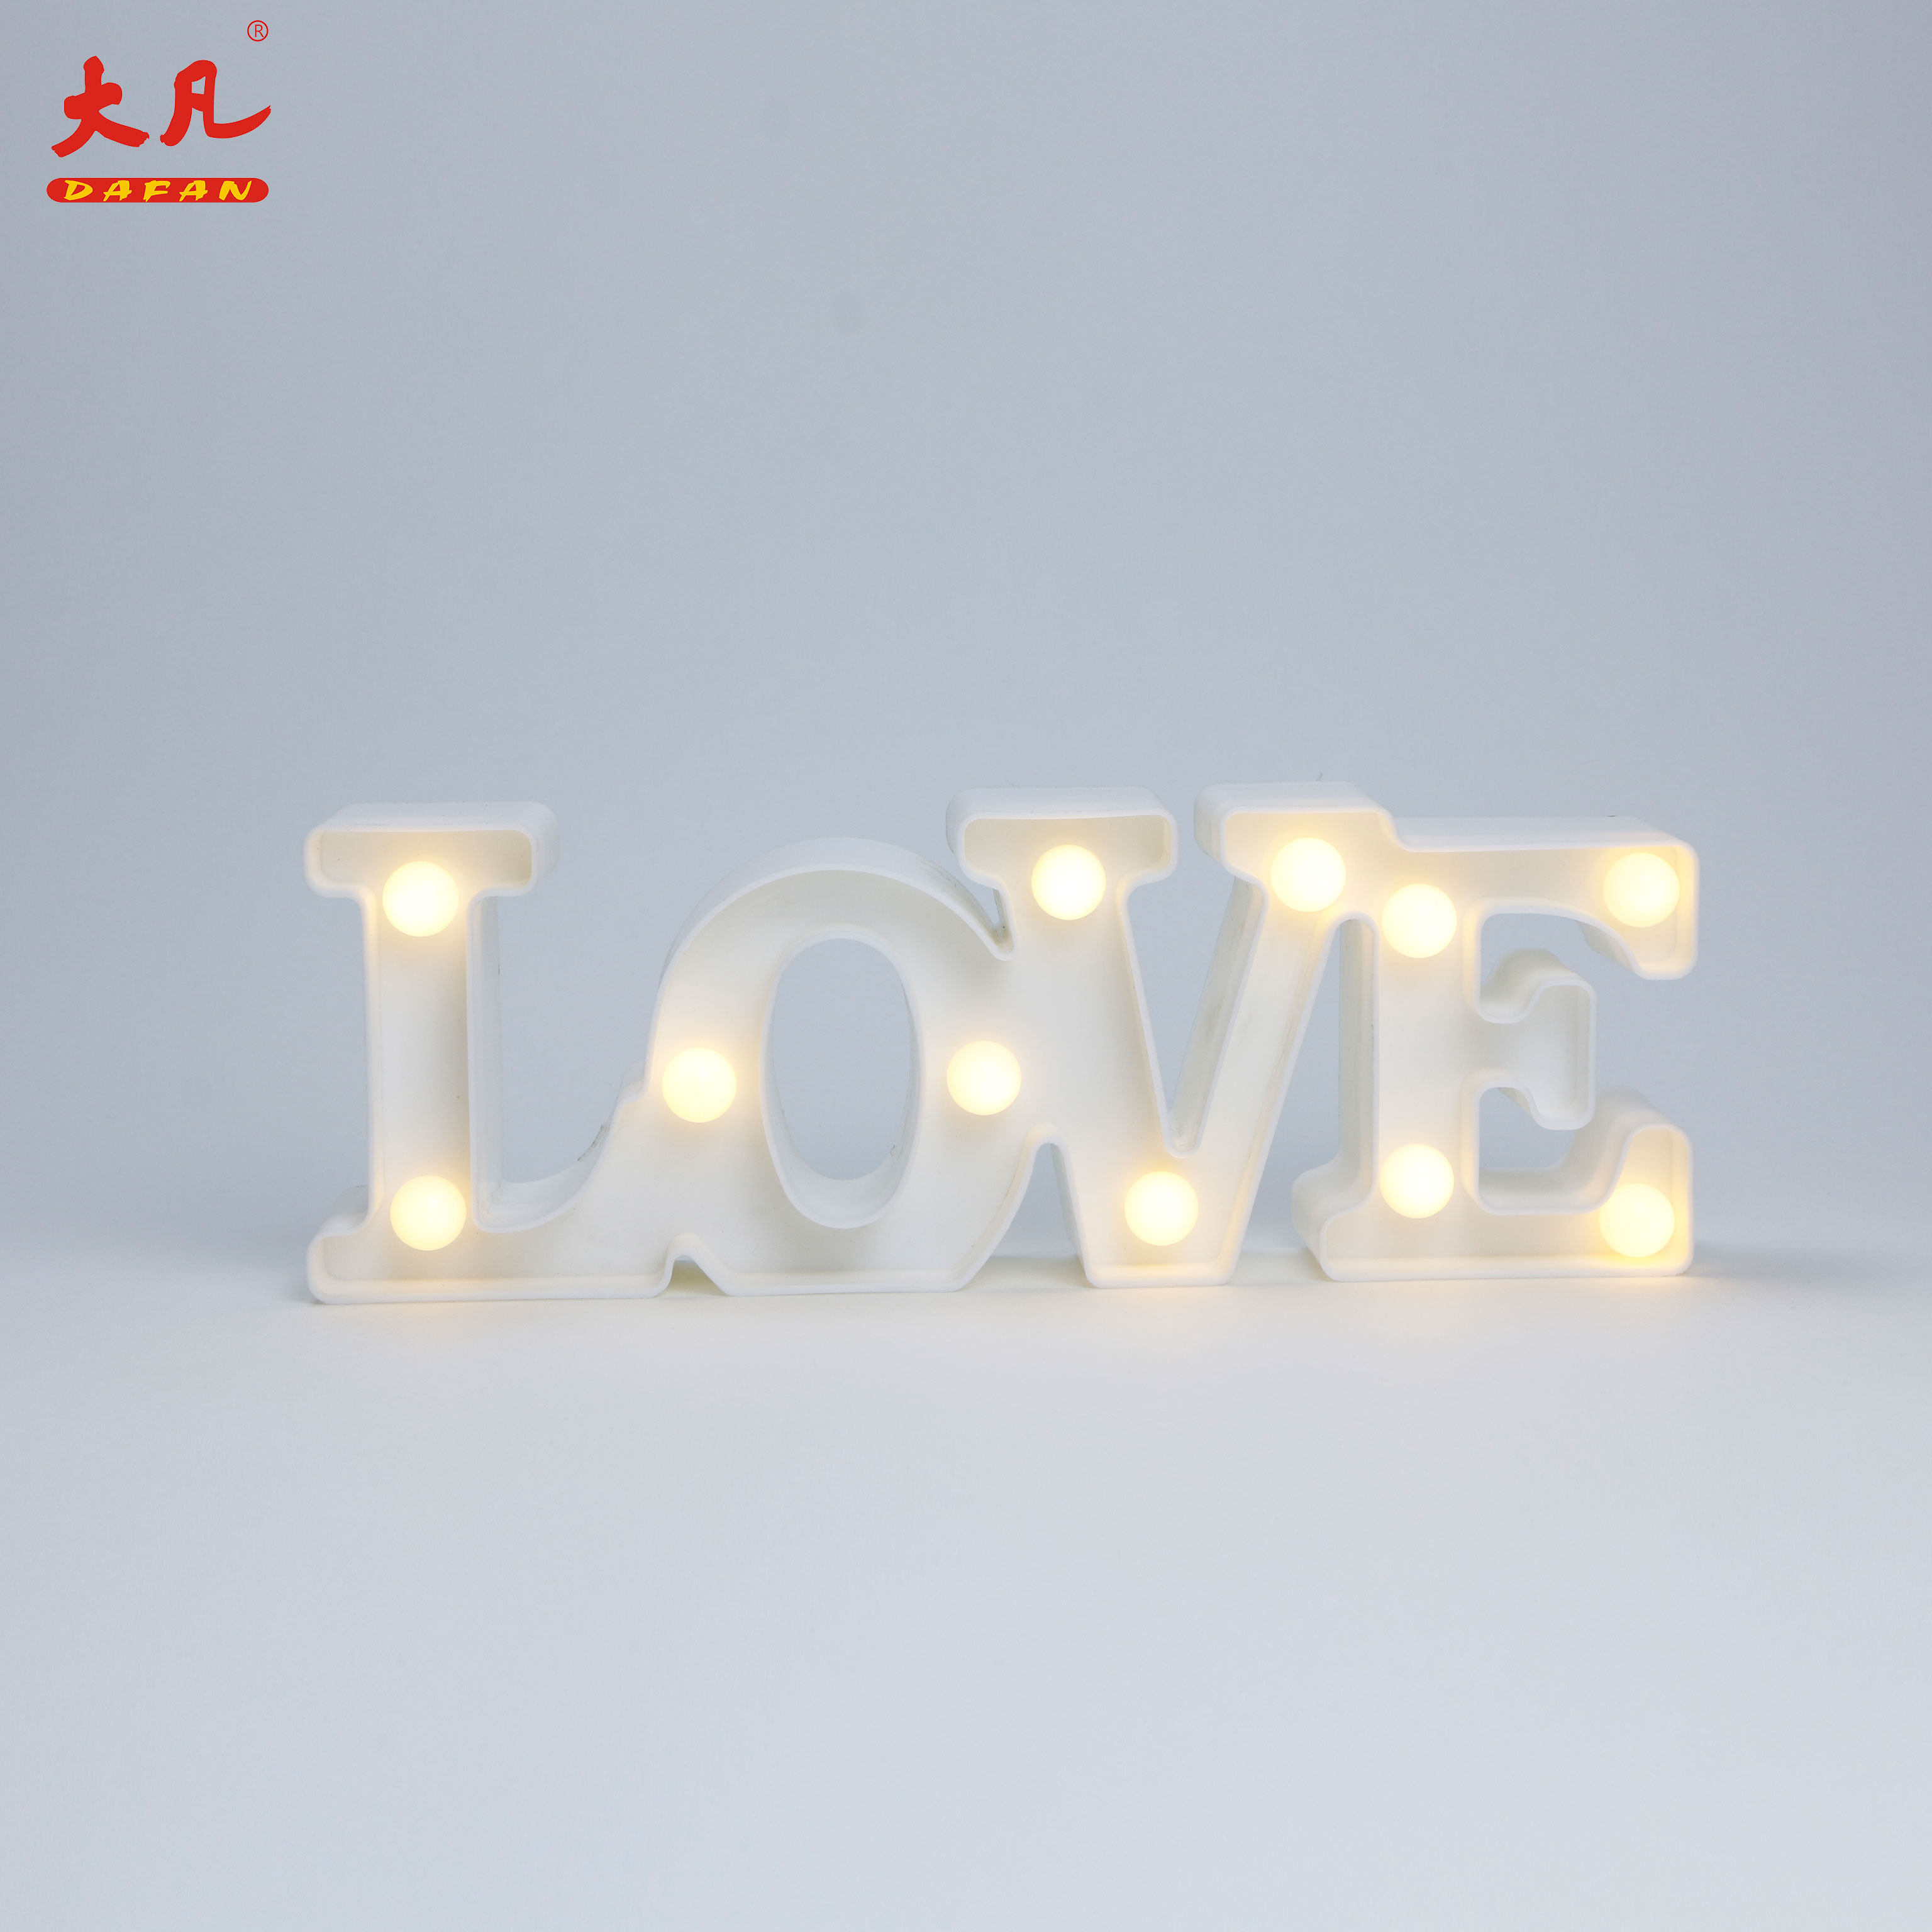 LOVE Shape Christmas letter light decorative led lights festival decoration marquee letter lights signs